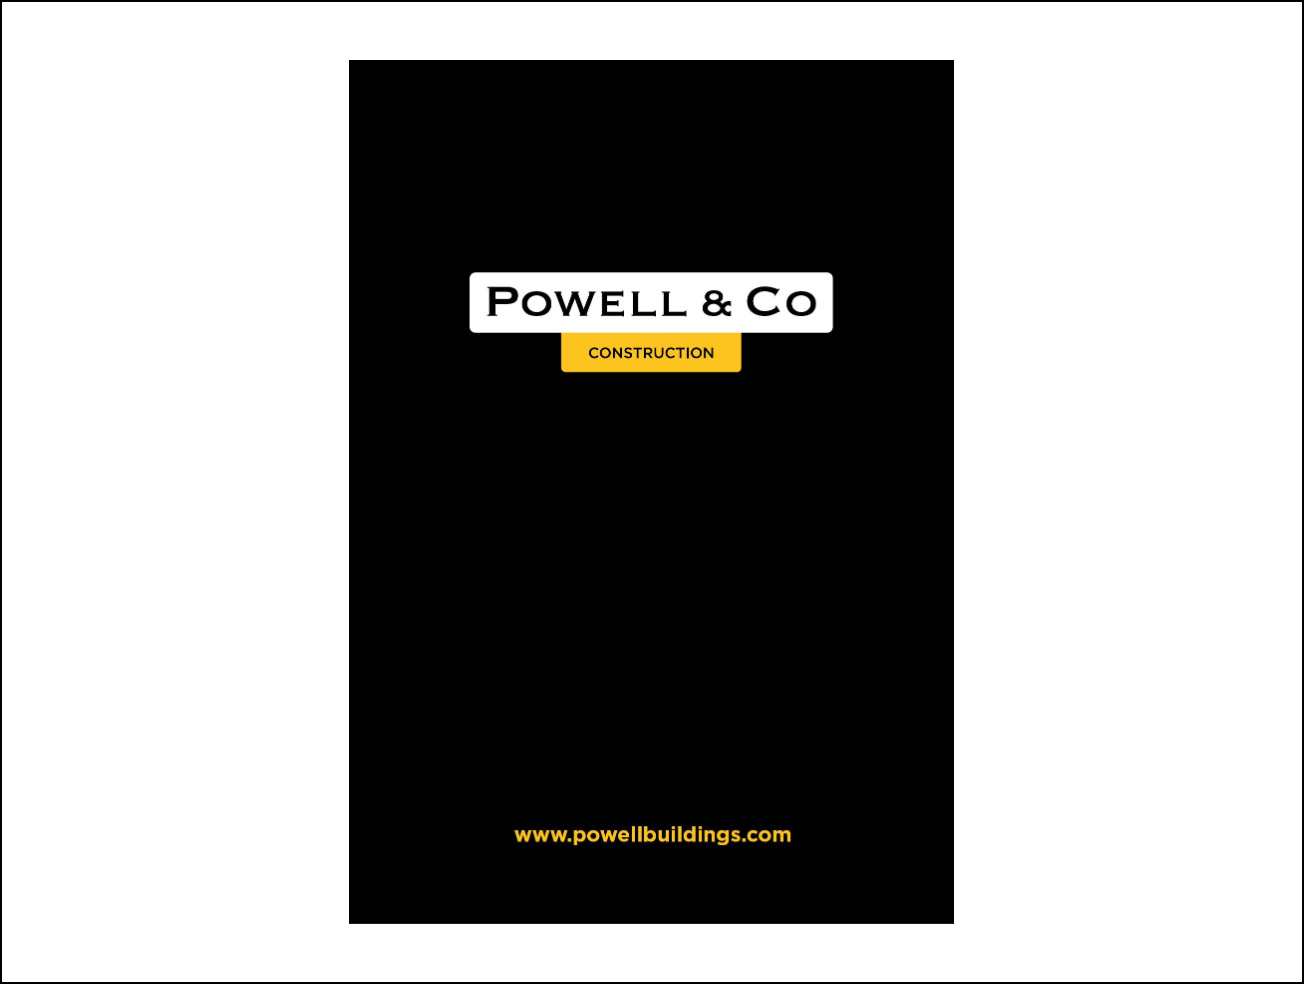 Powell & Co Construction Brochure